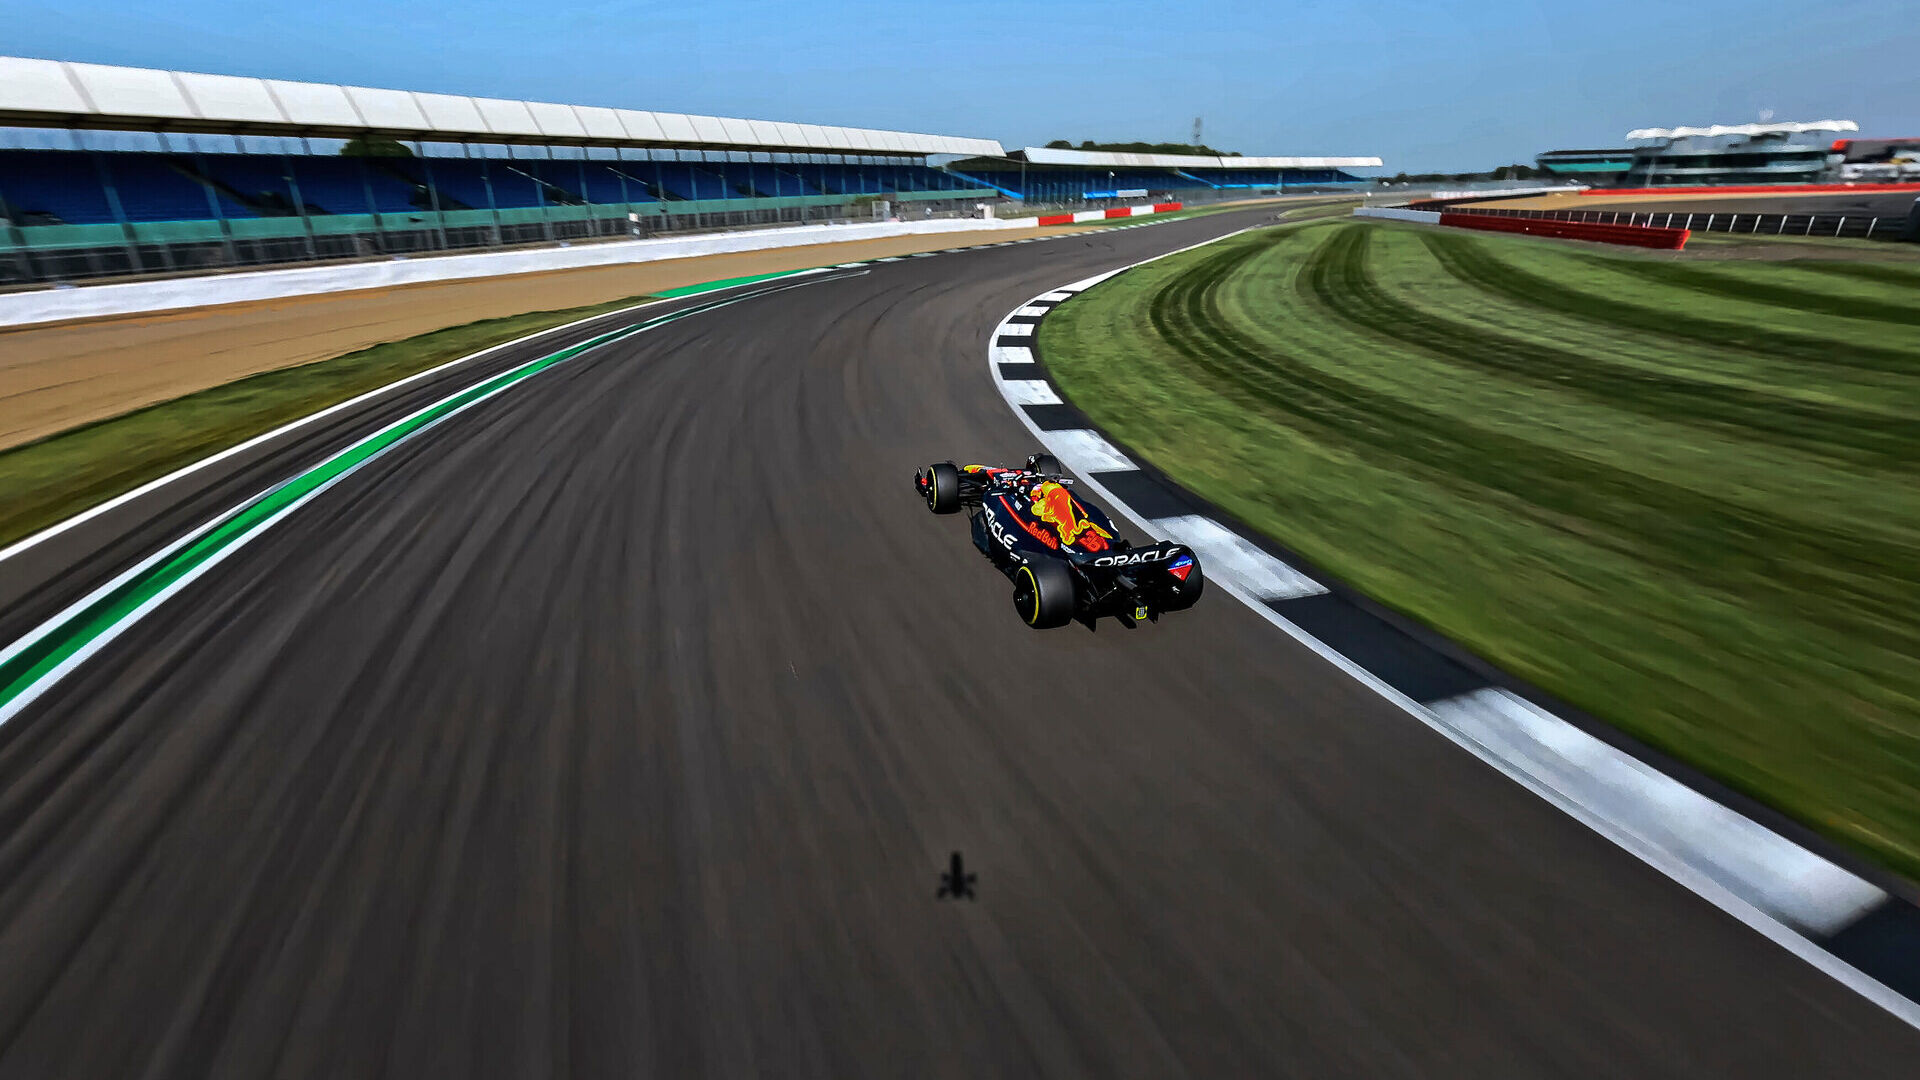 Red Bull: Silverstone-ზე ფორმულა 20 RB1-ს, რომელსაც მართავდა მაქს ვერსტაპენი, დაუპირისპირდა